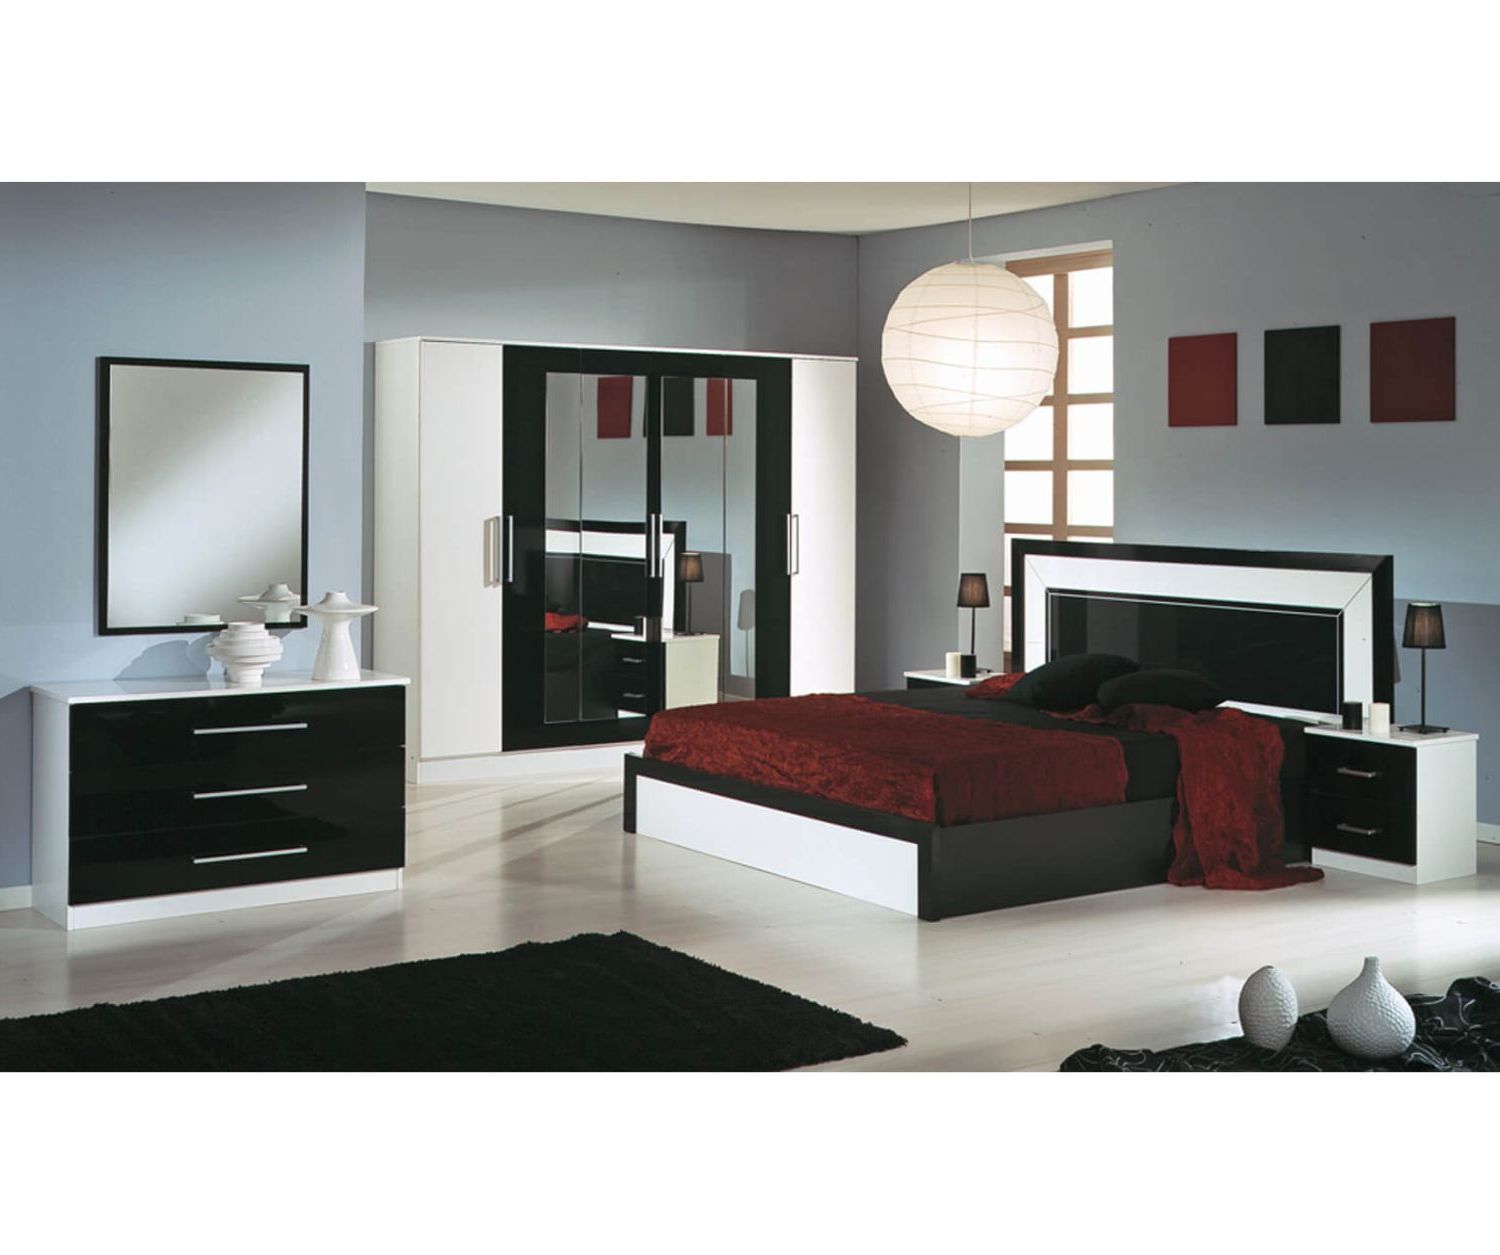 Dima Mobili Miami Black And White Bedroom Set With 6 Door Wardrobe Regarding Black And White Wardrobes Set (Gallery 11 of 20)